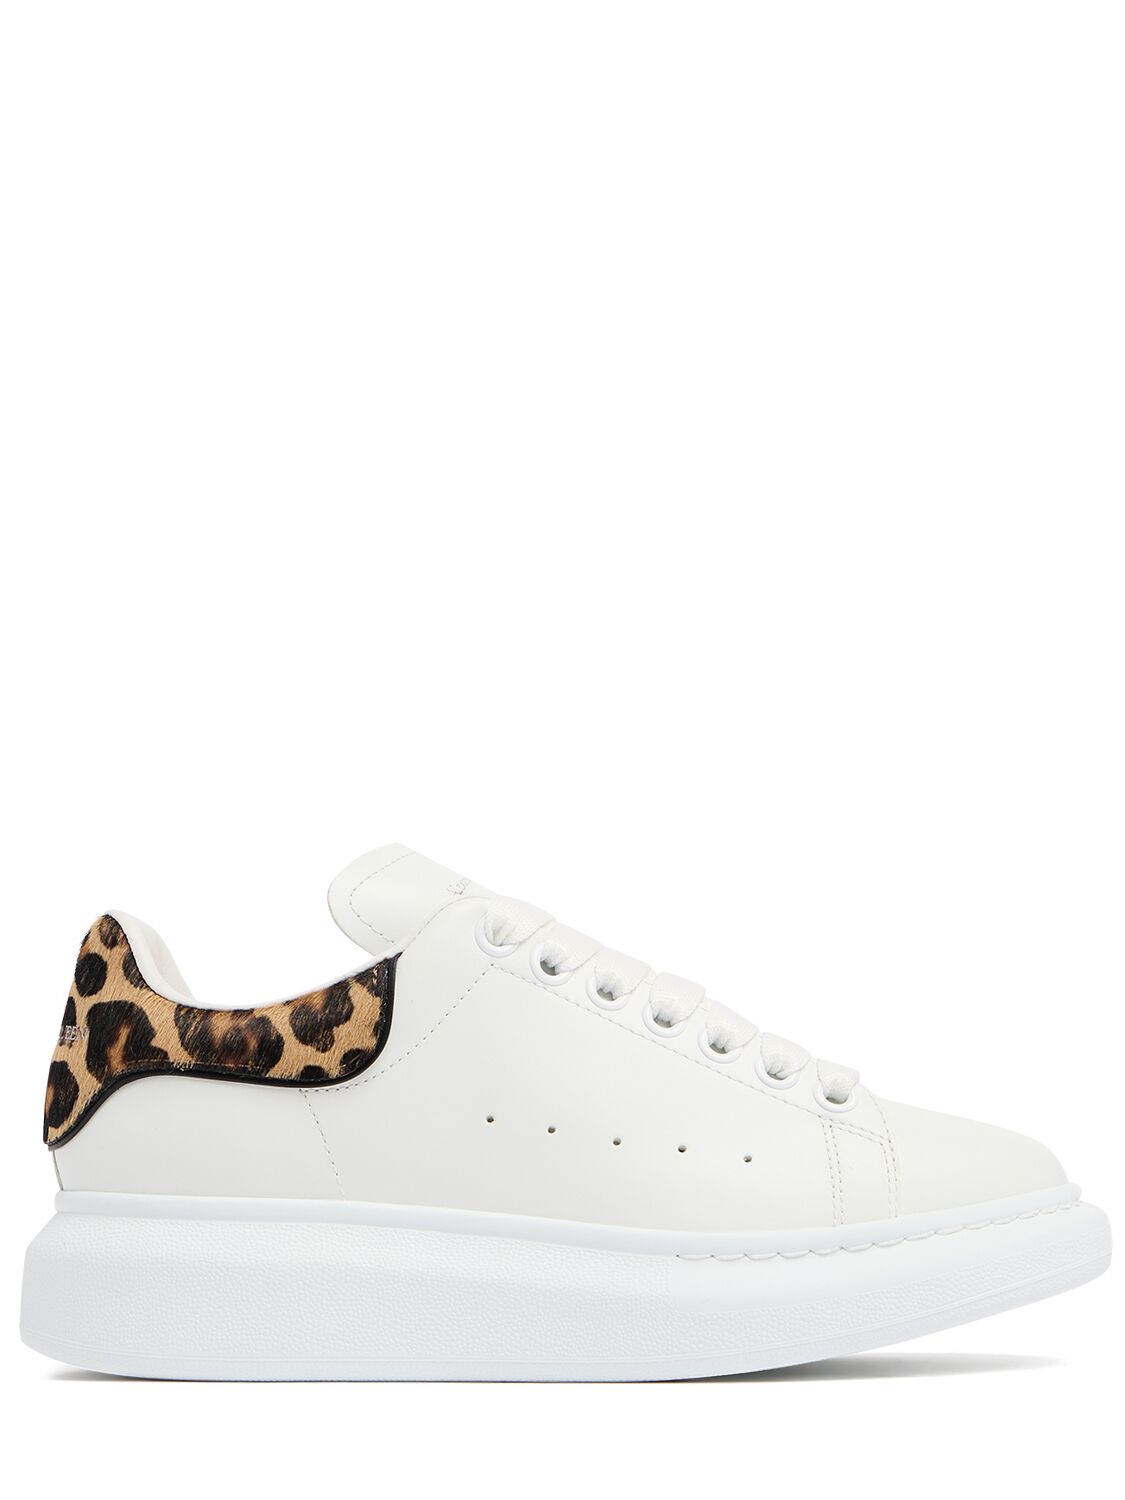 Alexander Mcqueen 45mm Leather Sneakers In White Leopard